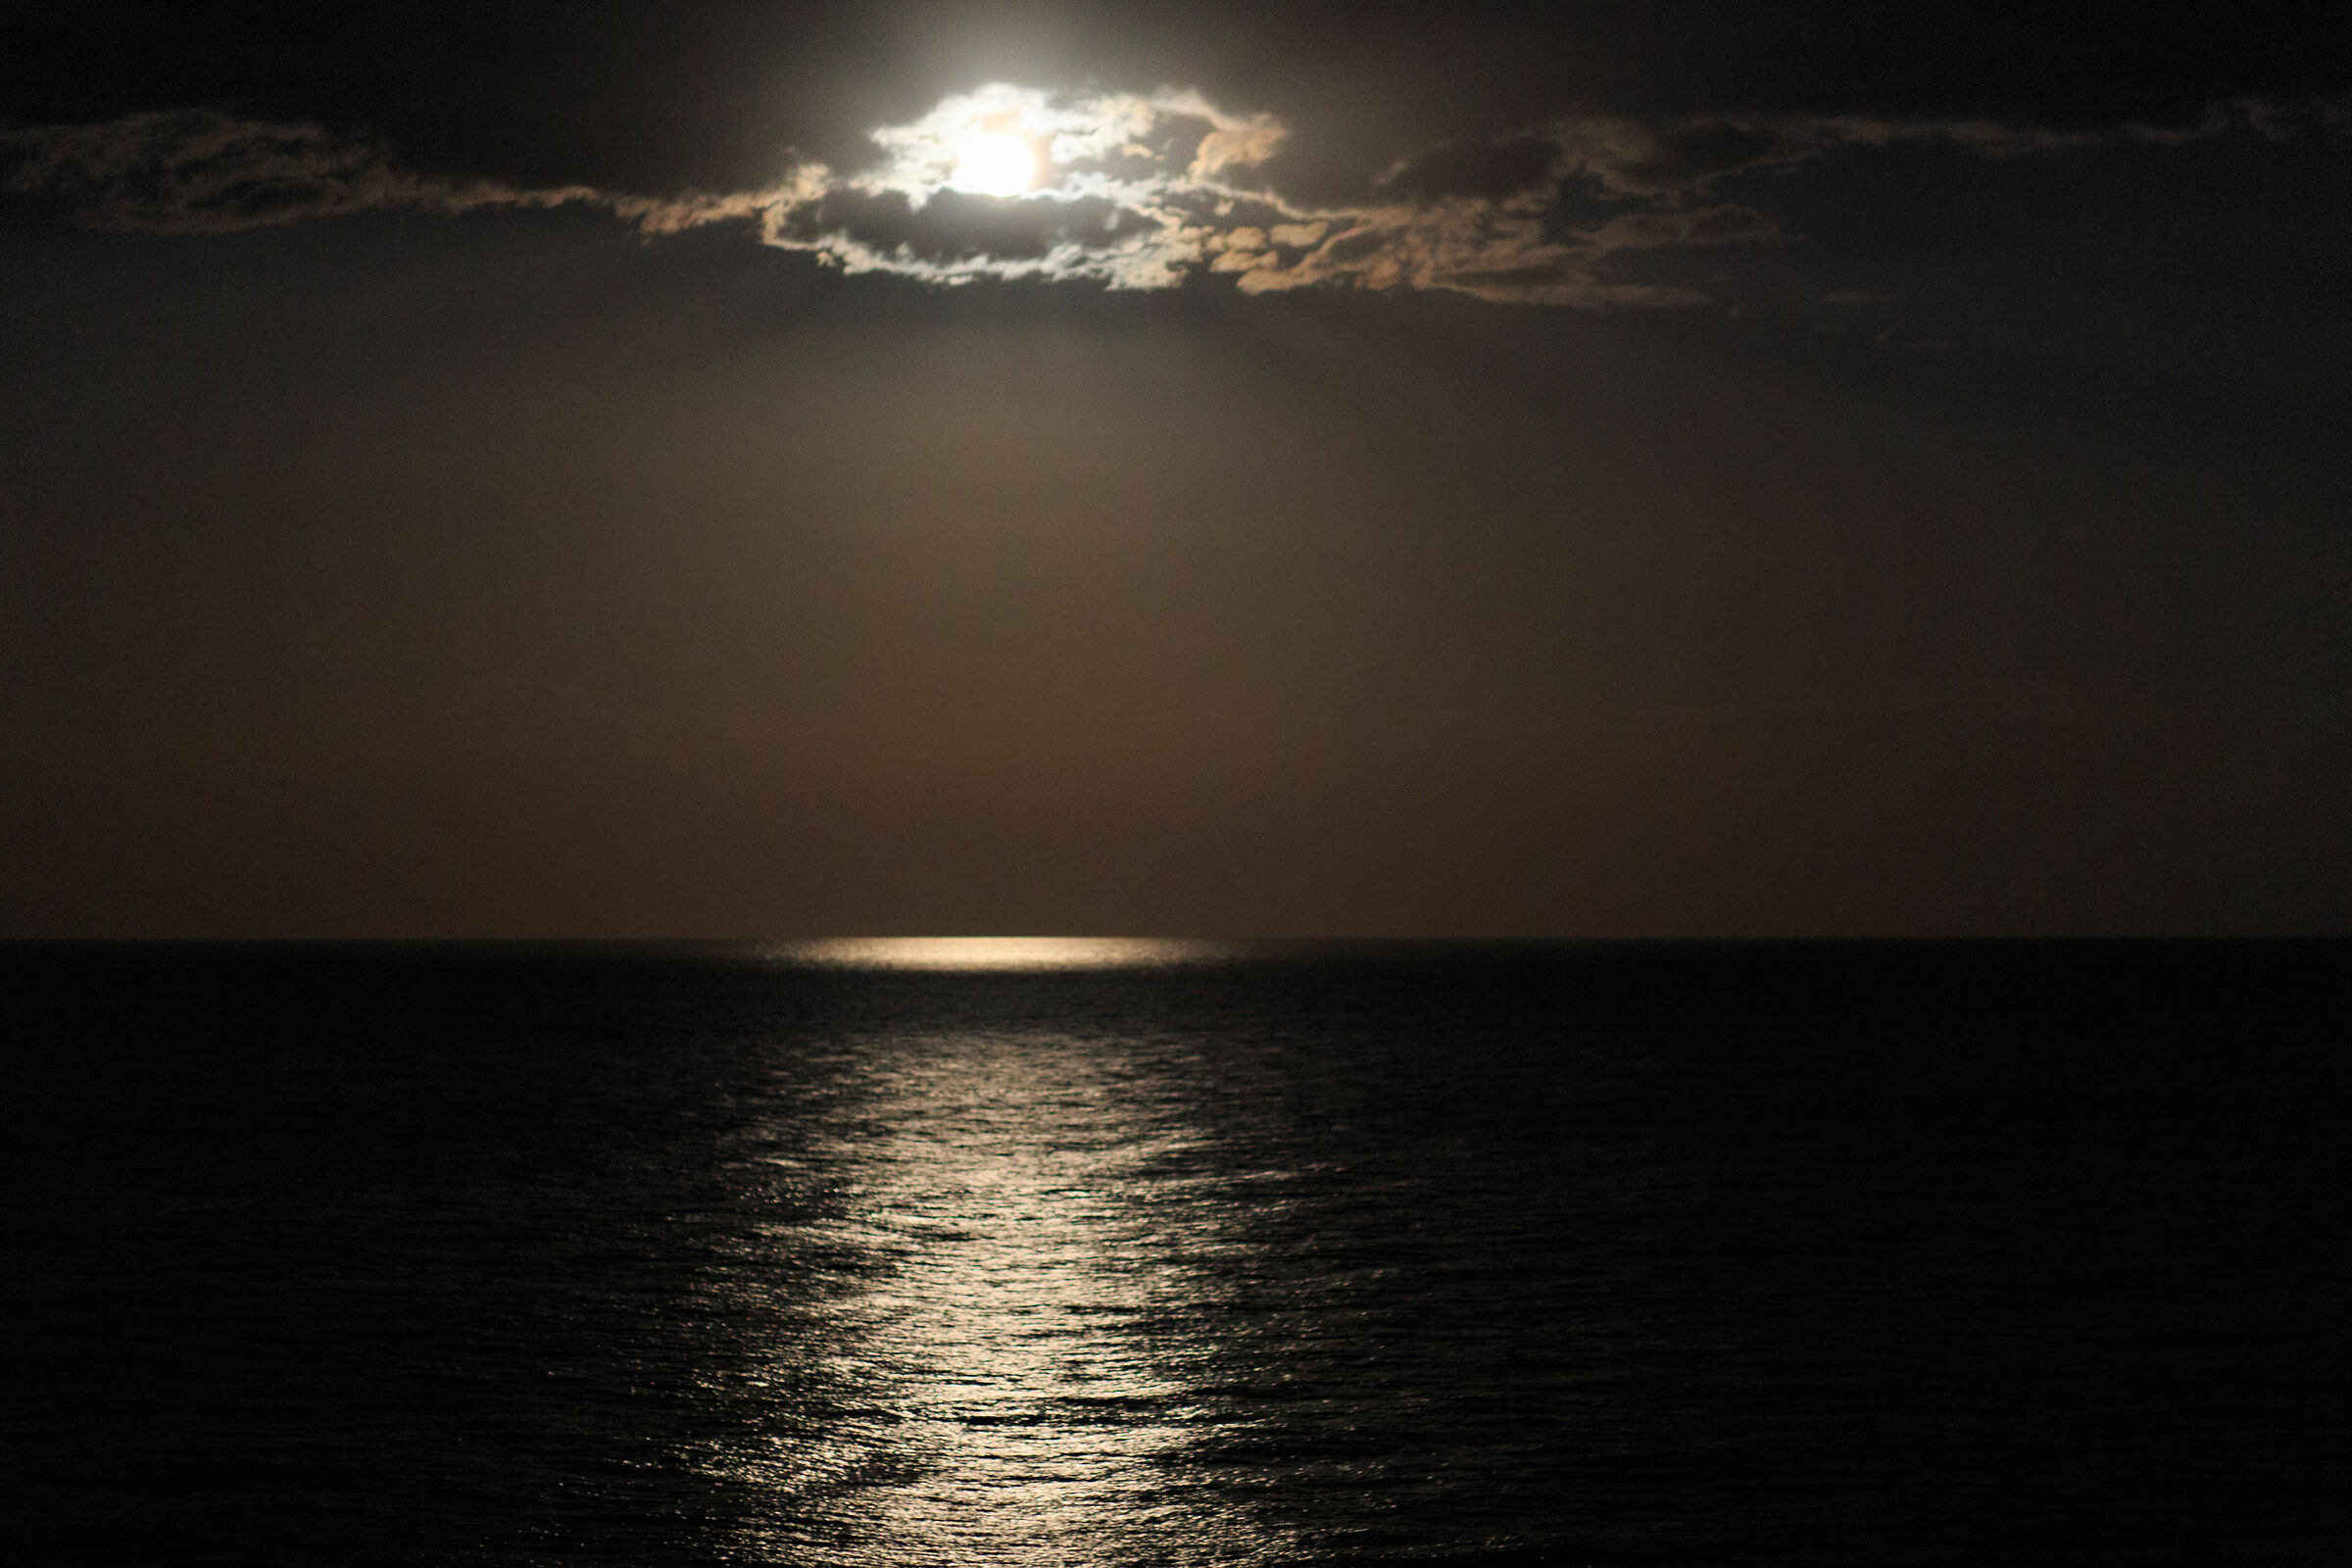 Luna sul mare dietro le nubi...